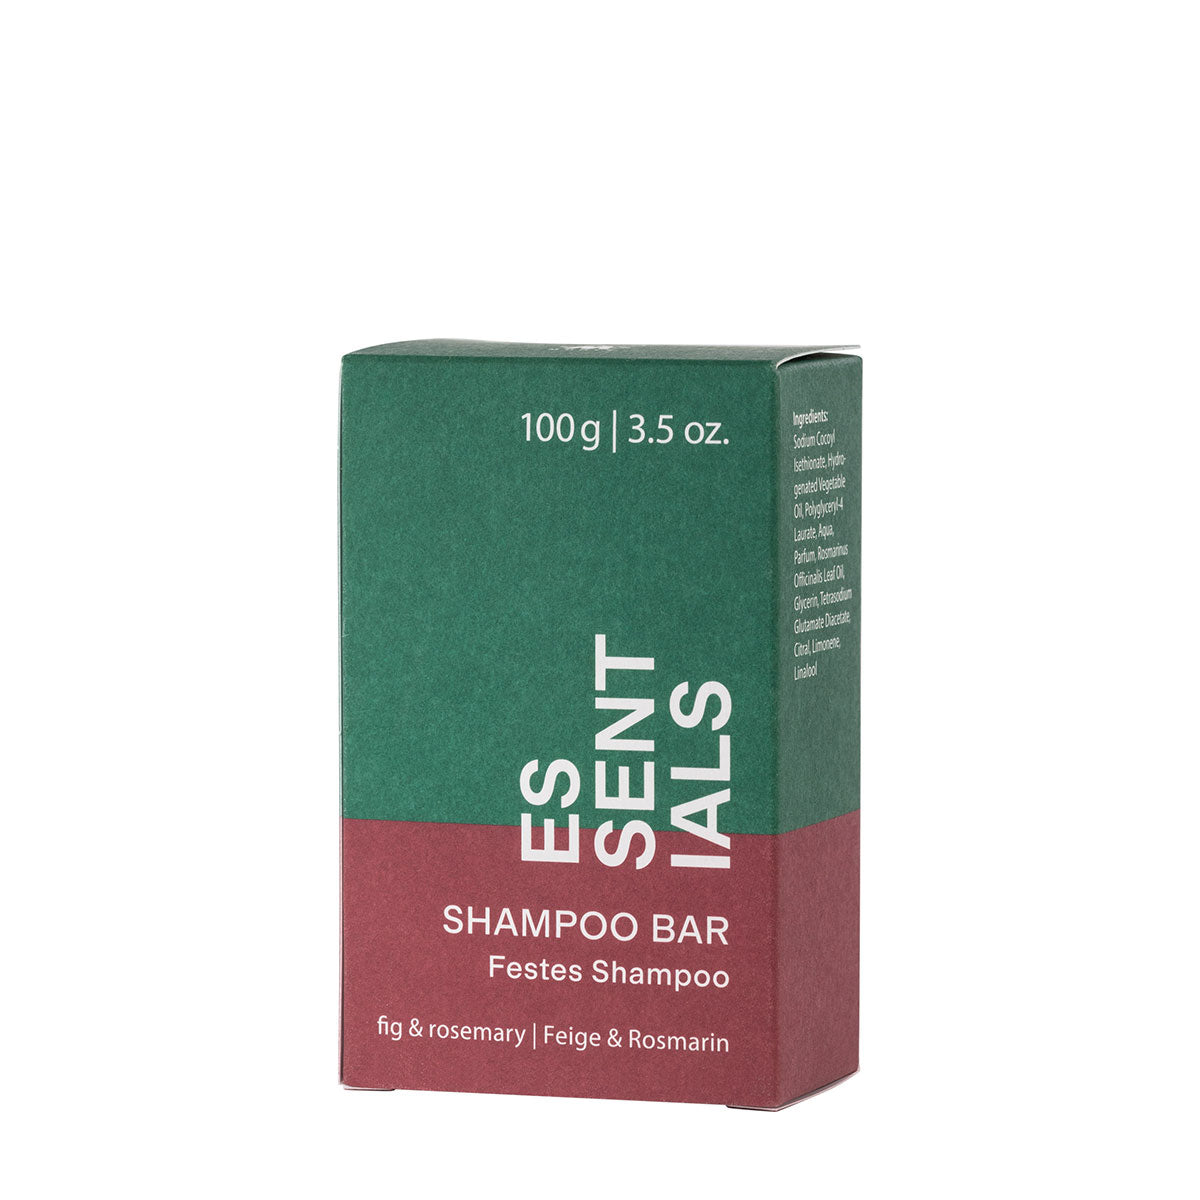 MÜHLE Essentials Fig & Rosemary Shampoo Bar (100g) - Packaging